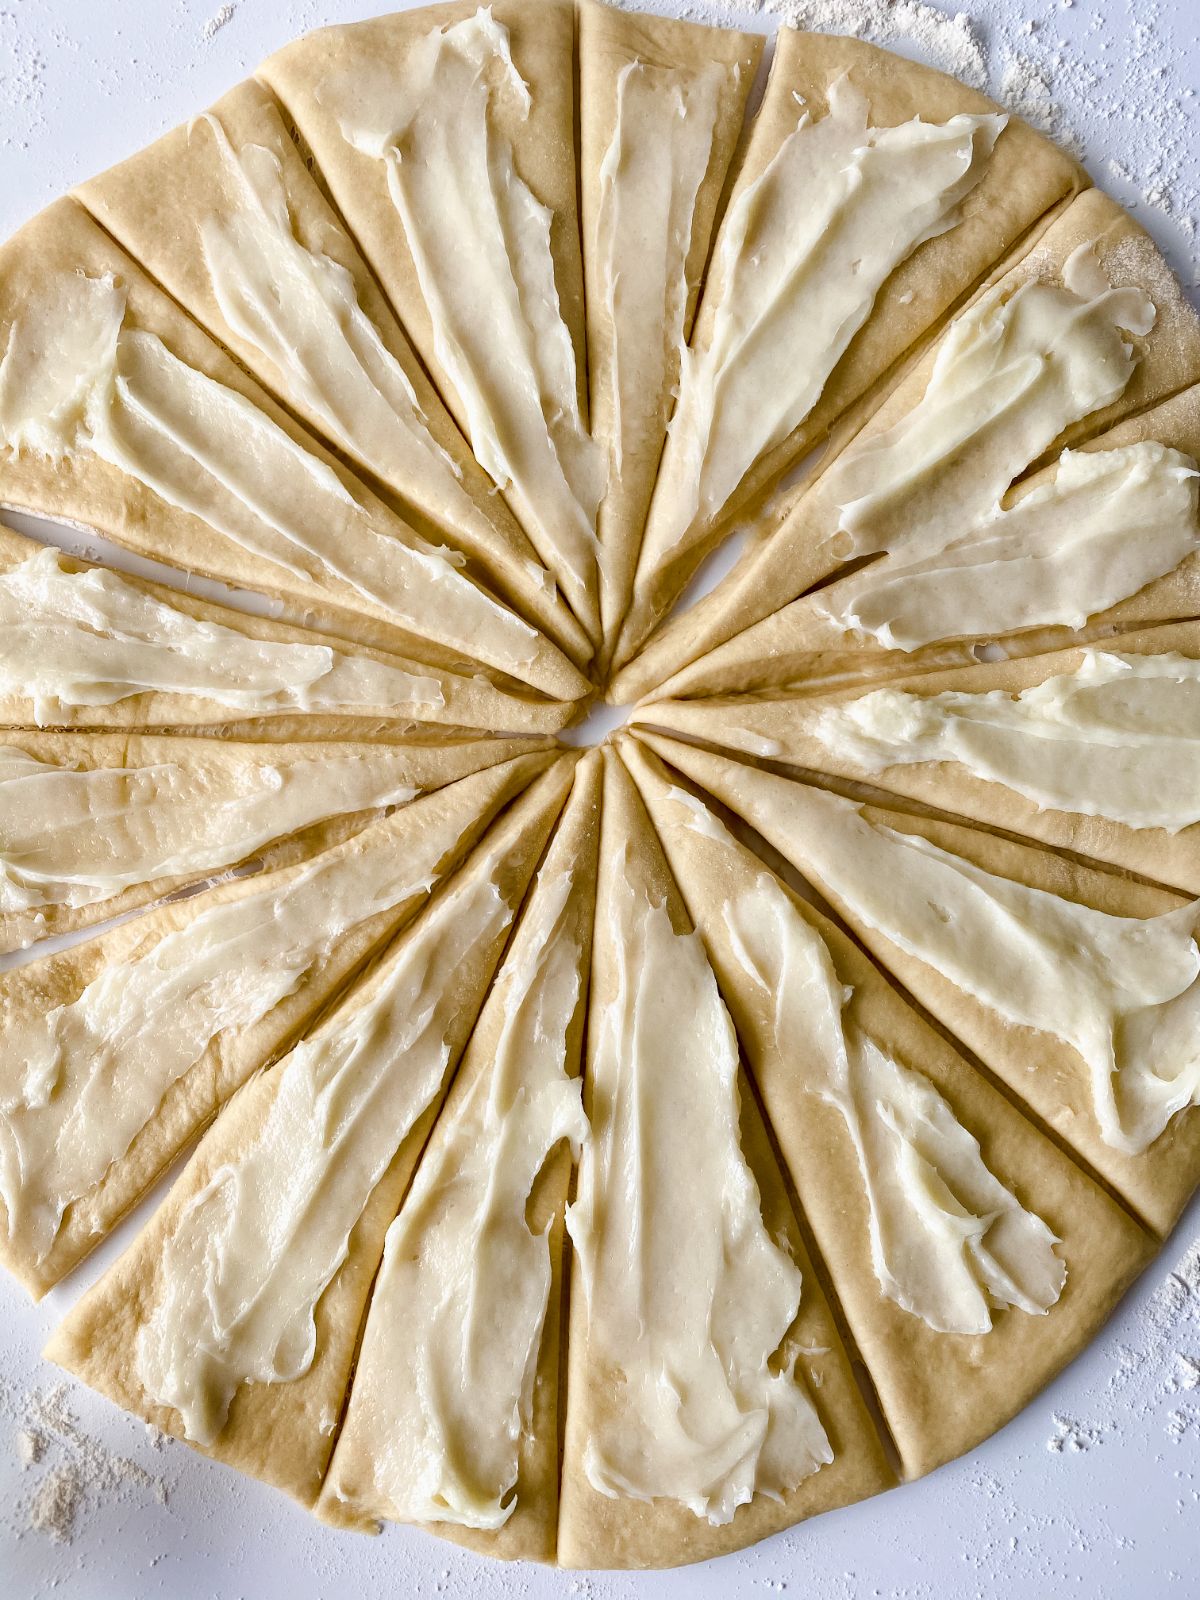 cream cheese on top of dough